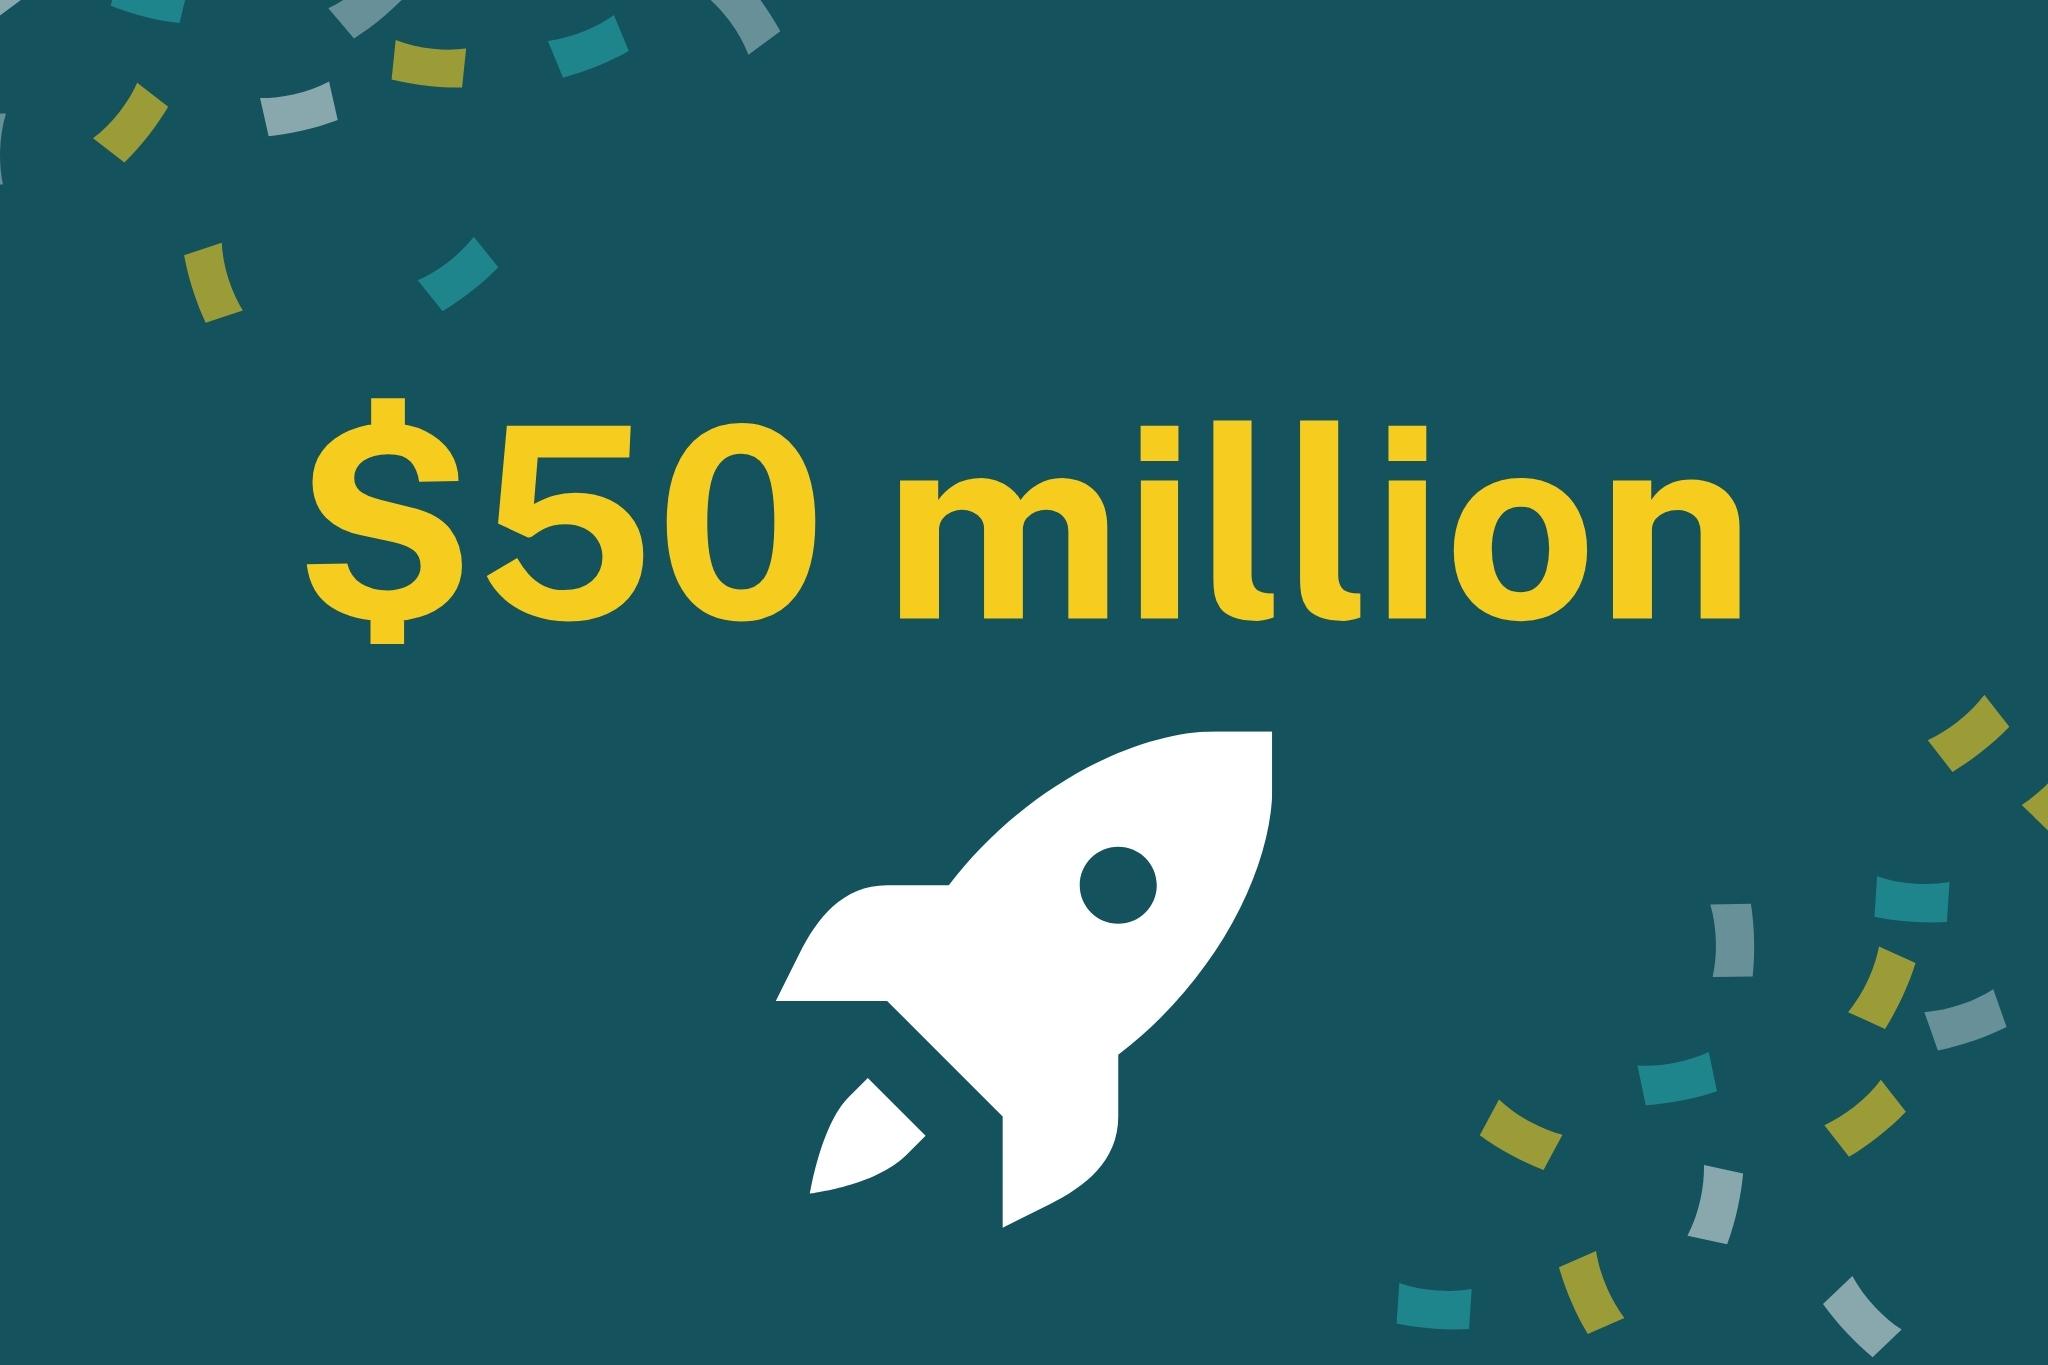 Mission Driven Finance milestone: $50 million in assets into community